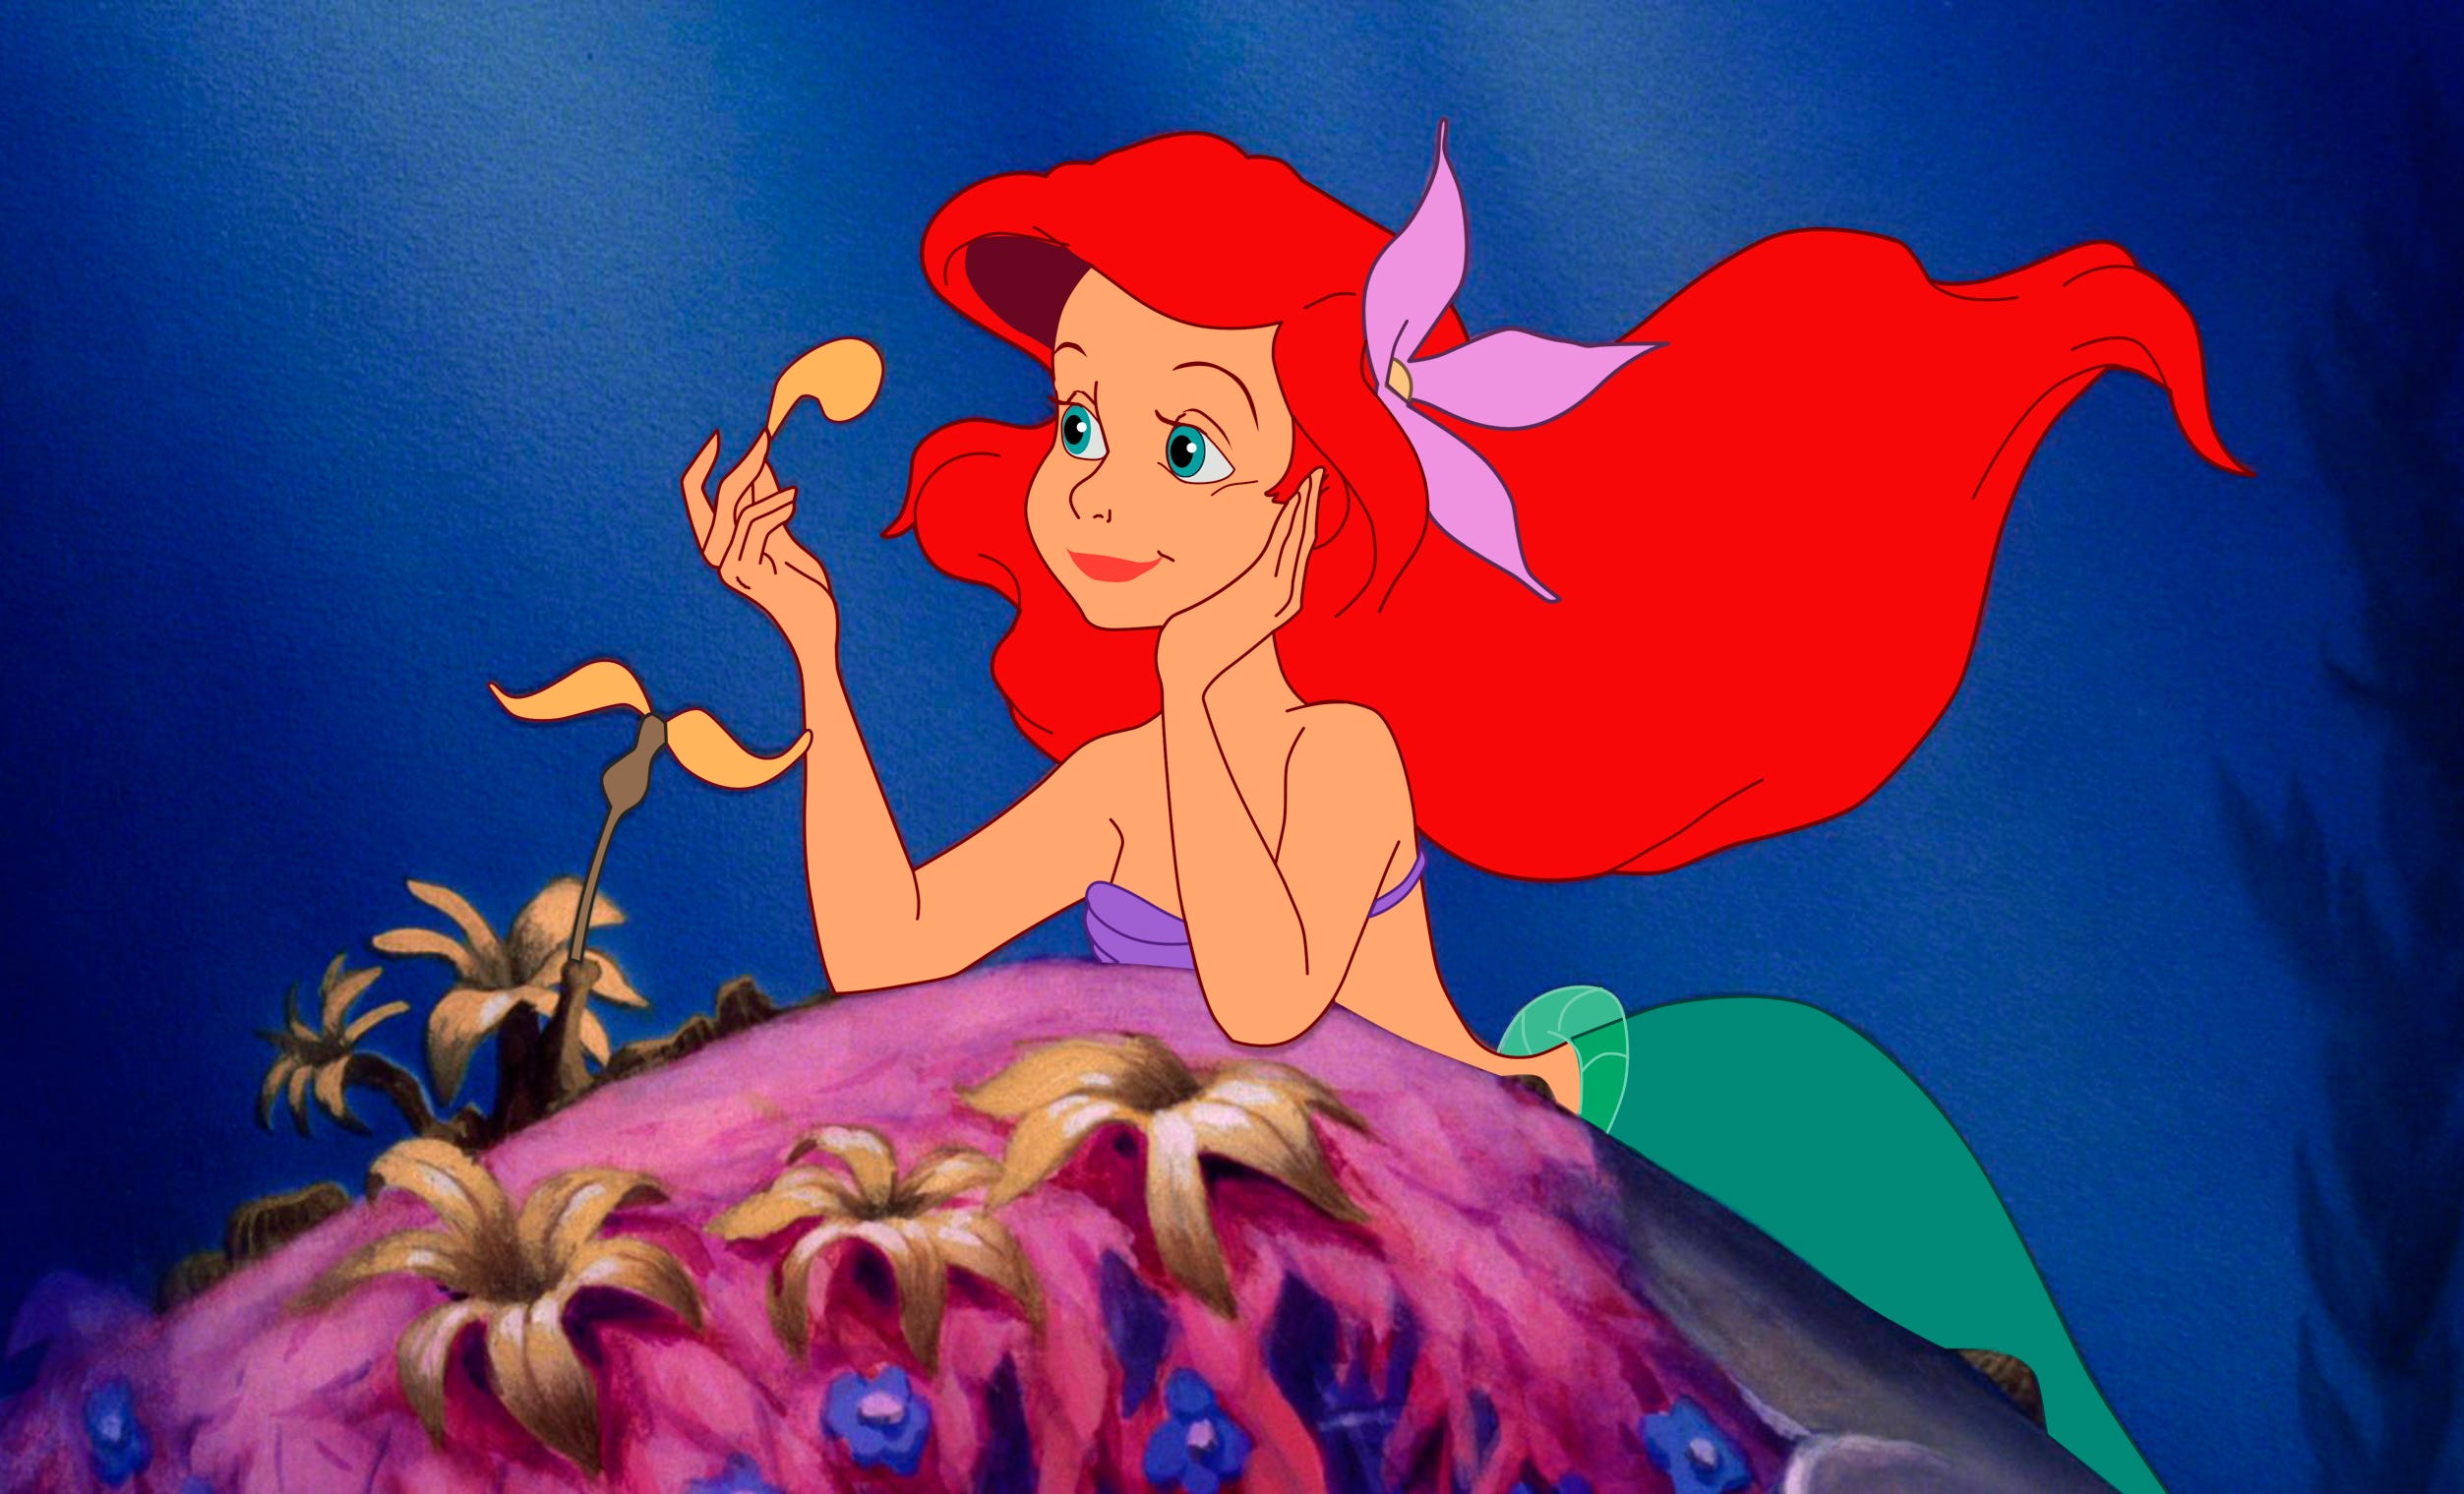 Sad About 'The Little Mermaid' Casting Decision? Let's Talk